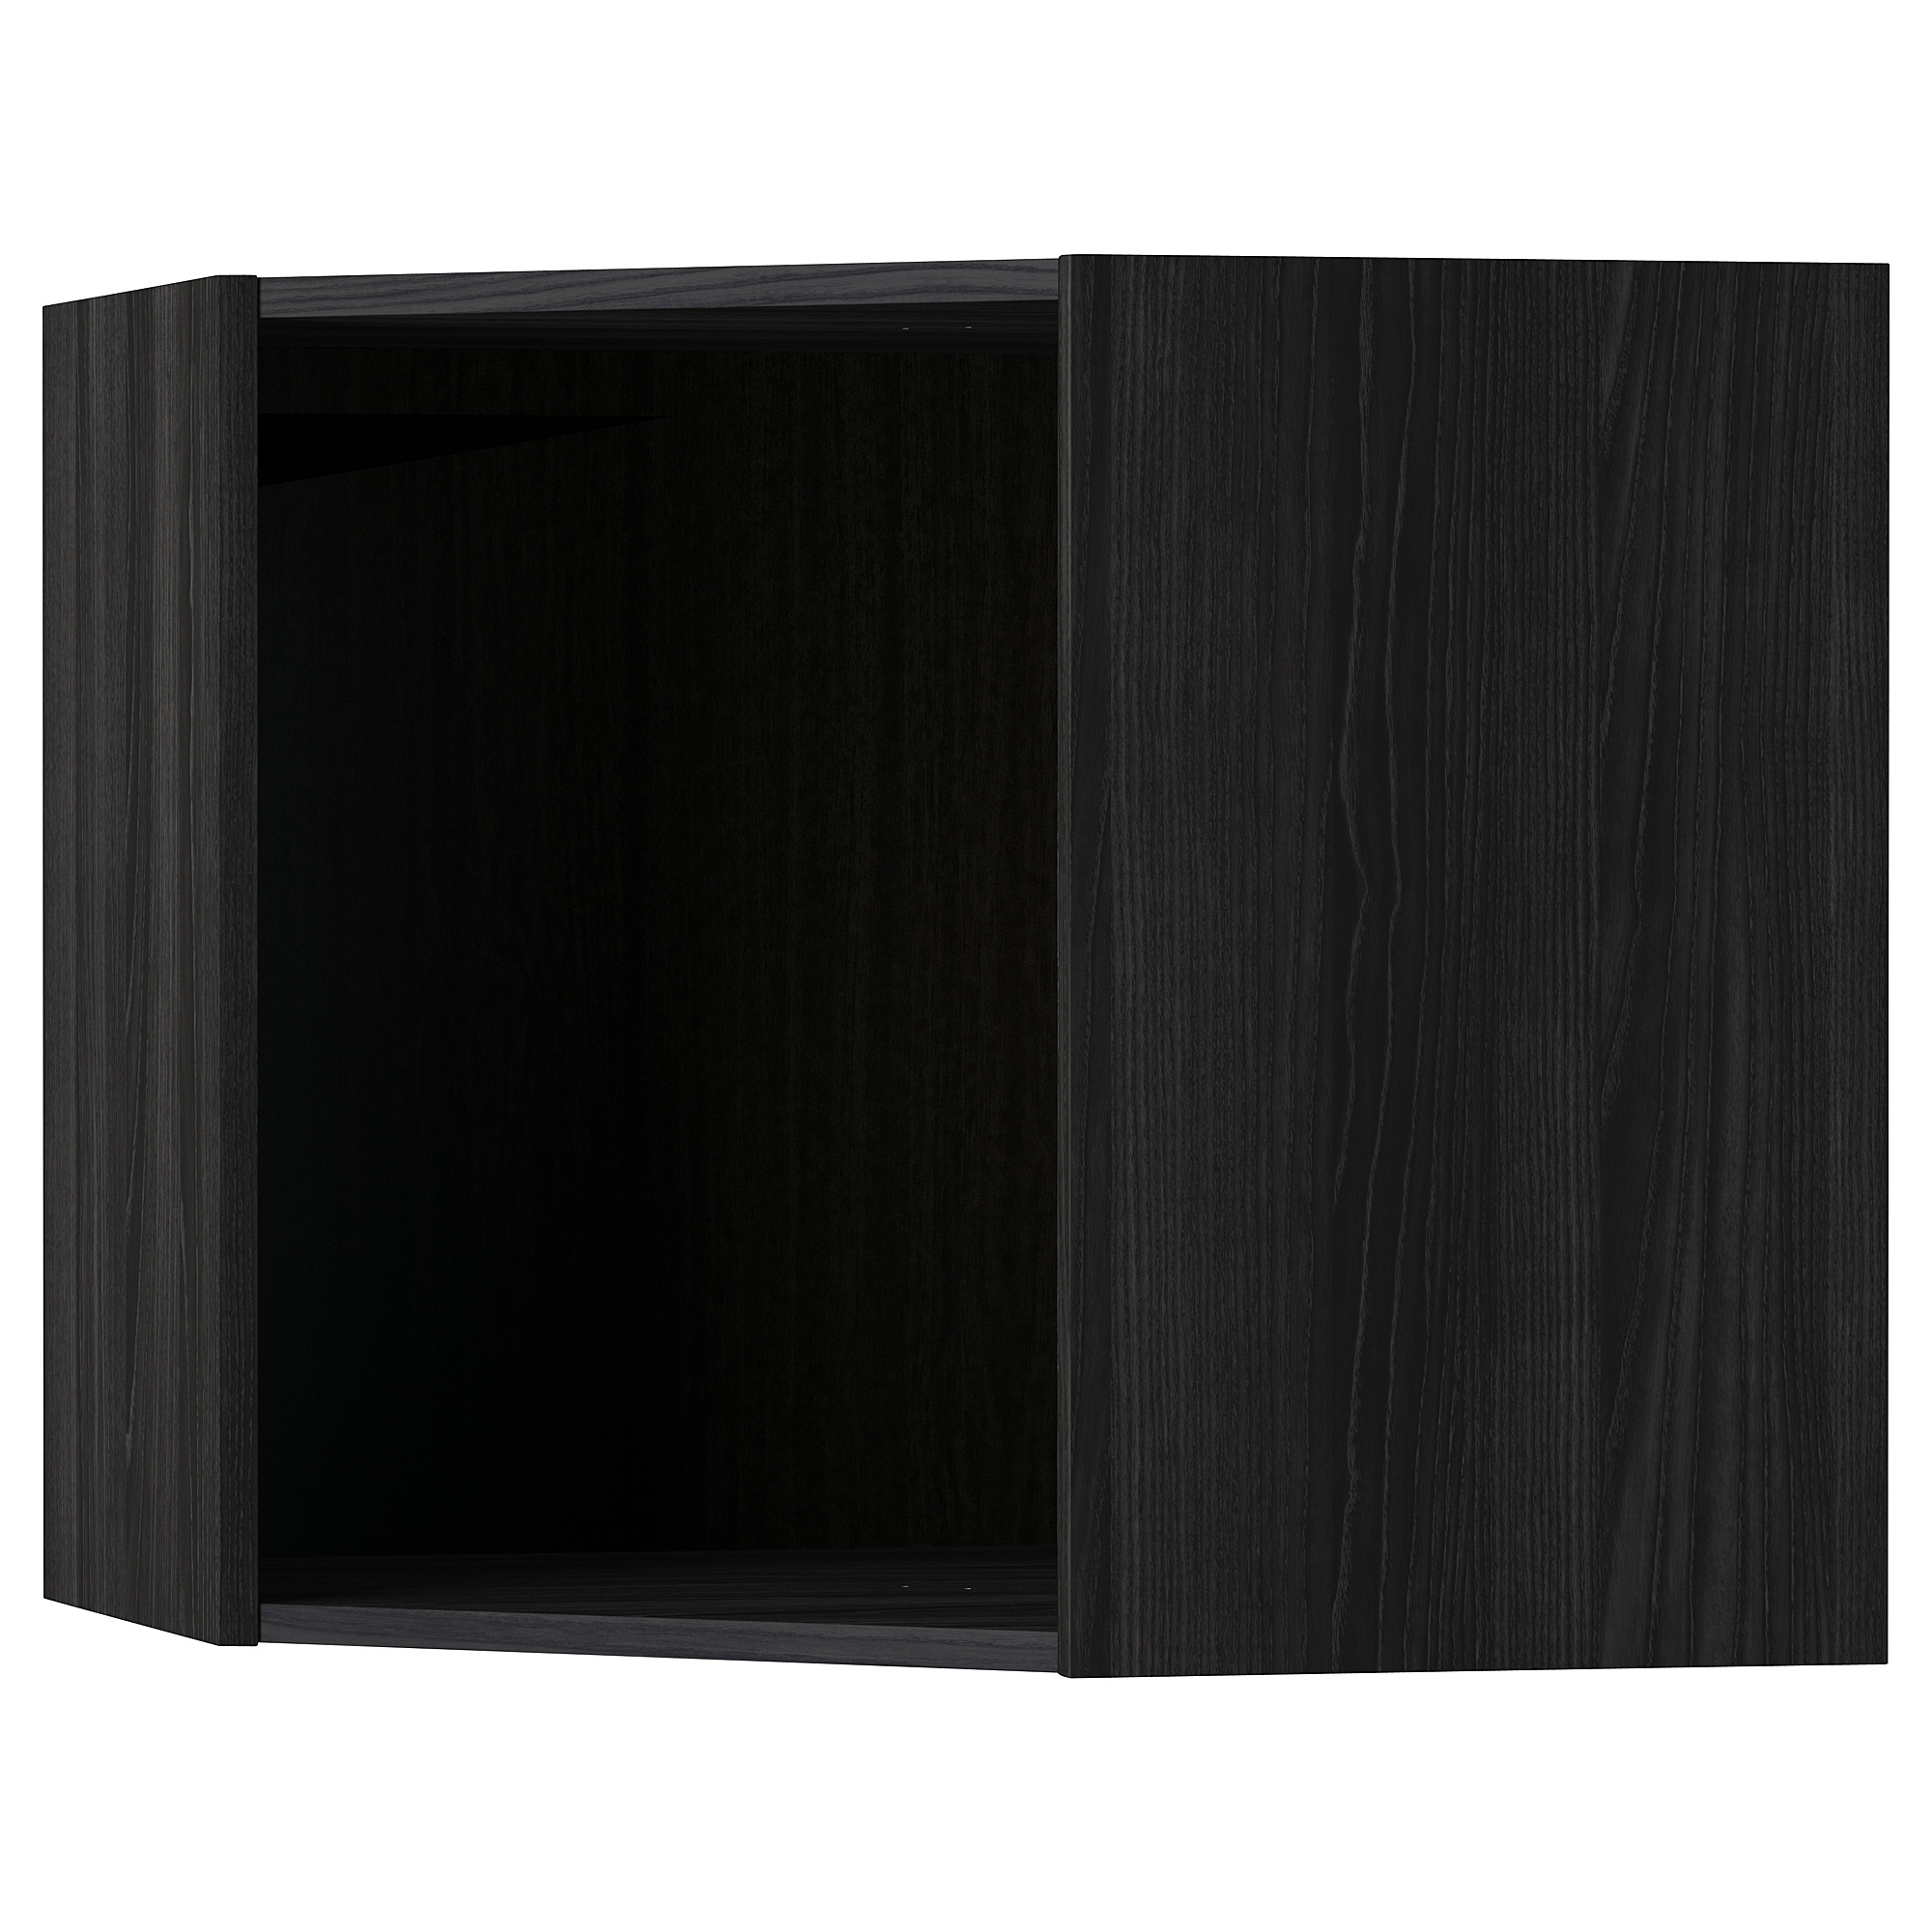 METOD corner wall cabinet frame